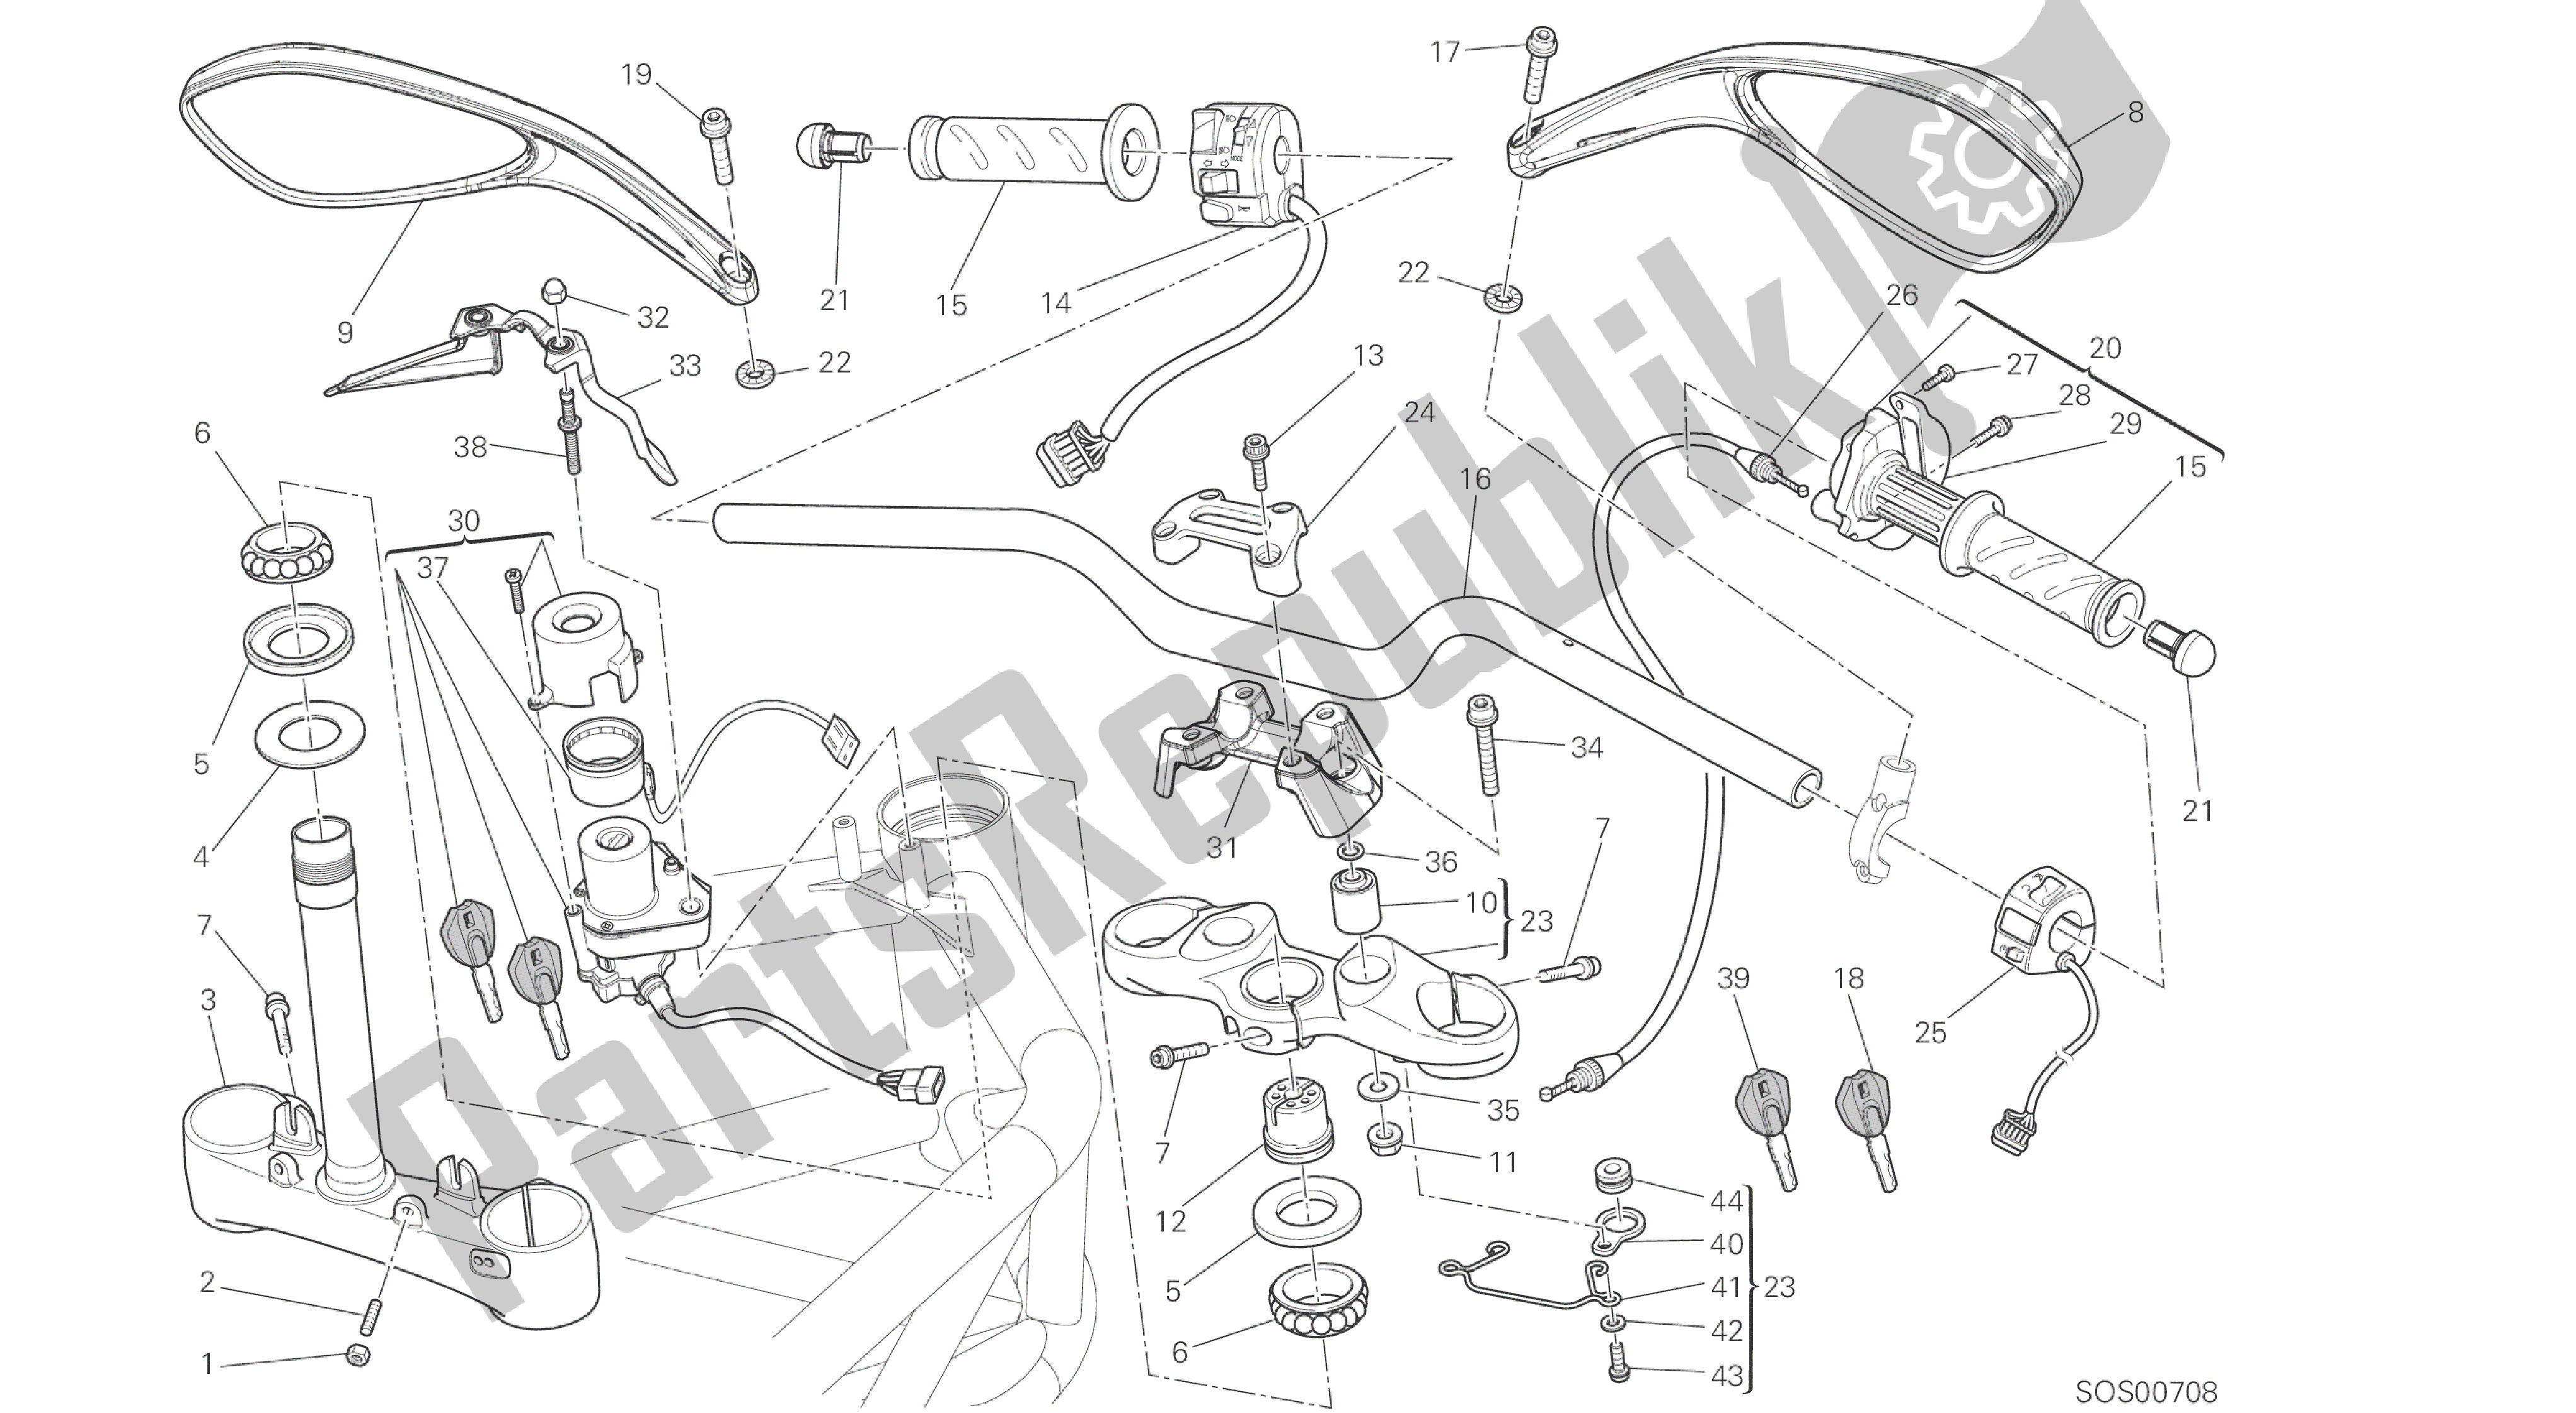 Todas las partes para Dibujo 026 - Manillar [mod: M796 Abs; Xst: Marco De Grupo Aus, Bra, Eur, Jap, Twn] de Ducati Monster ABS 796 2014